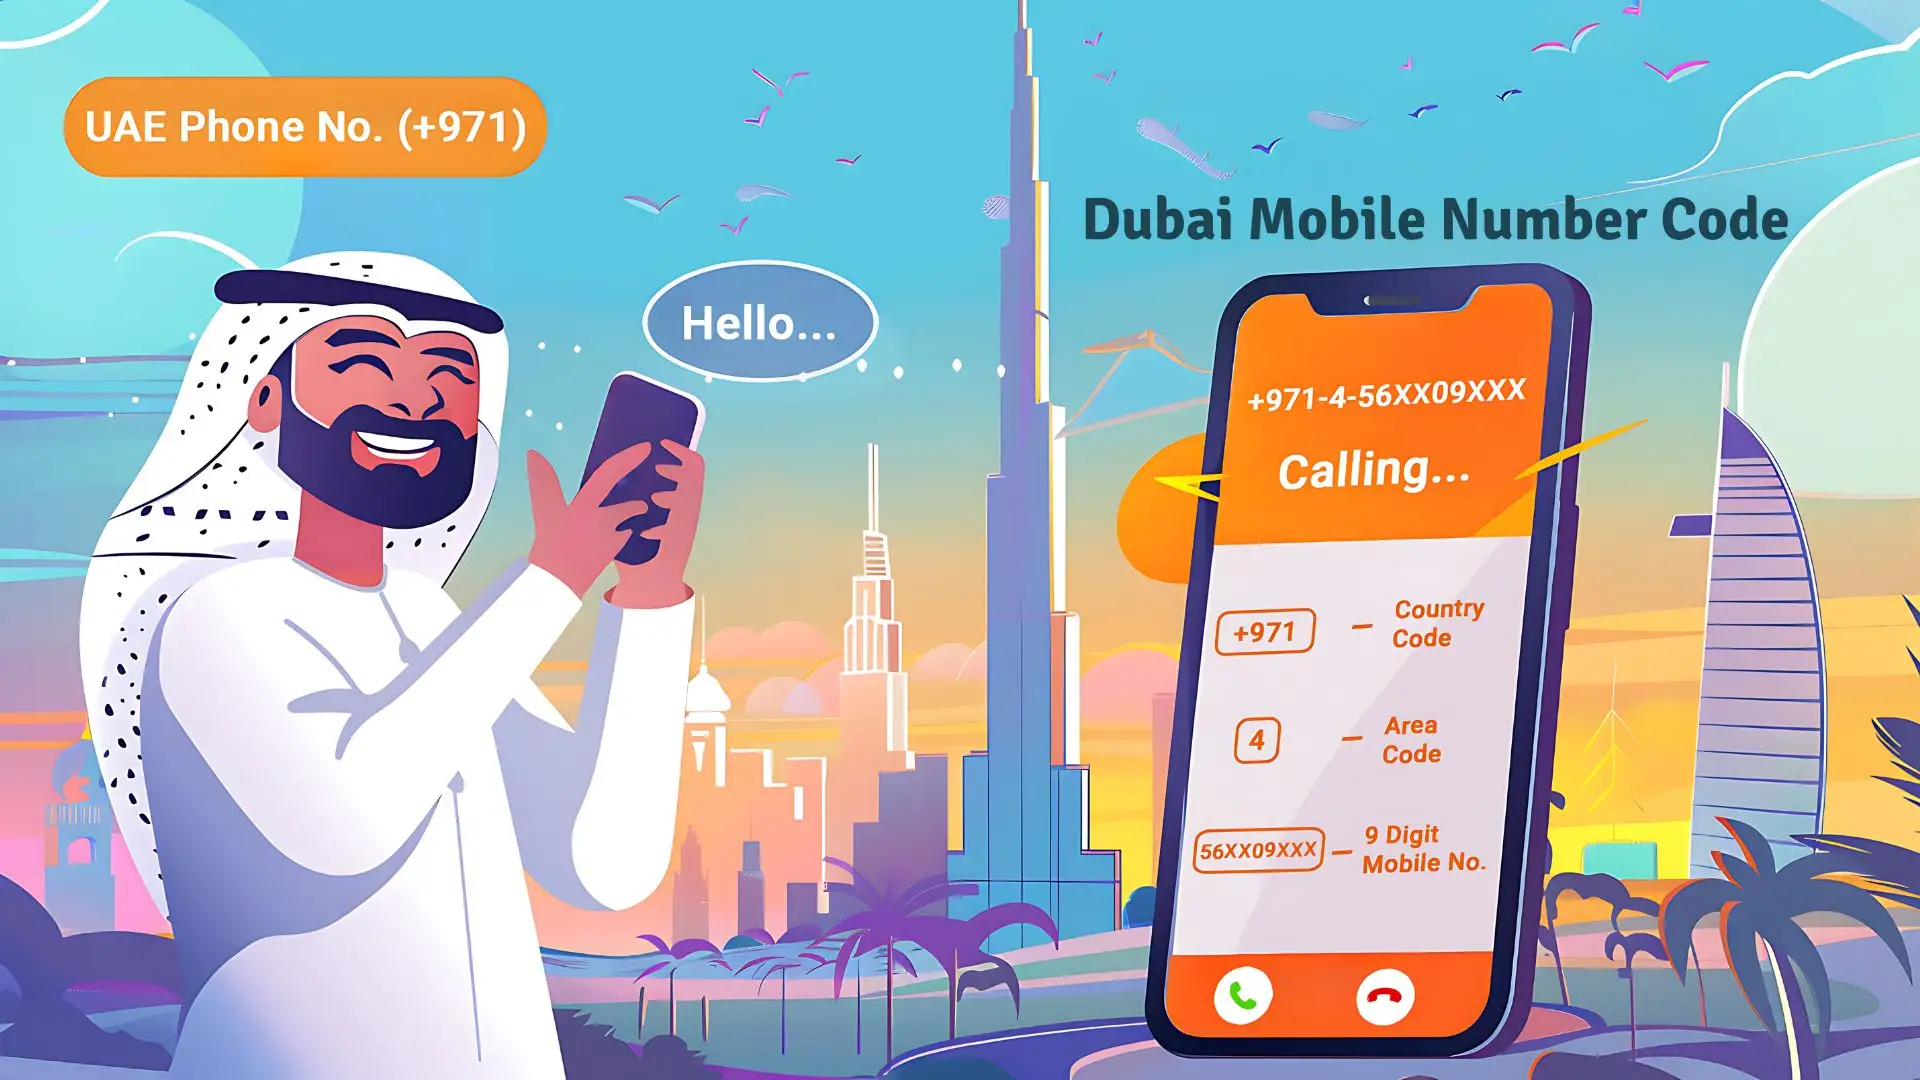 Dubai Mobile Number Code